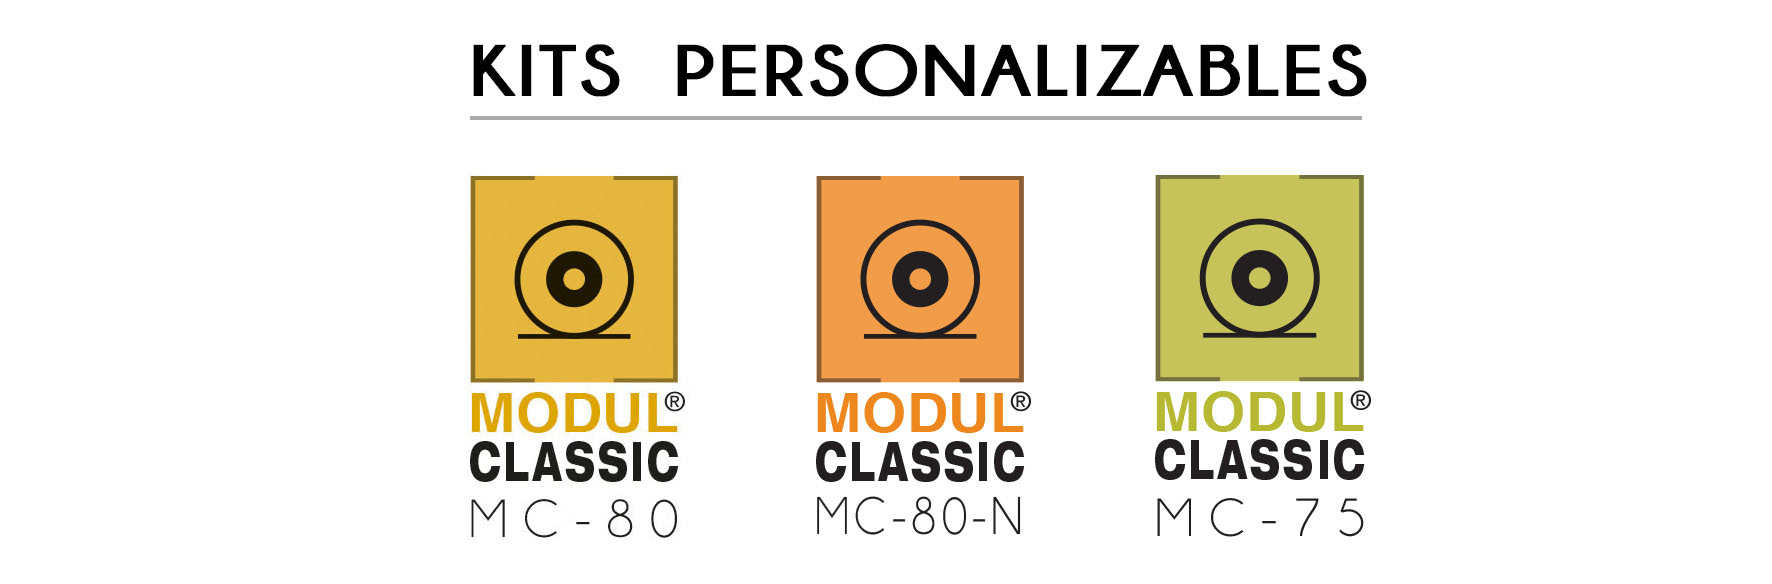 Kit Personalizables